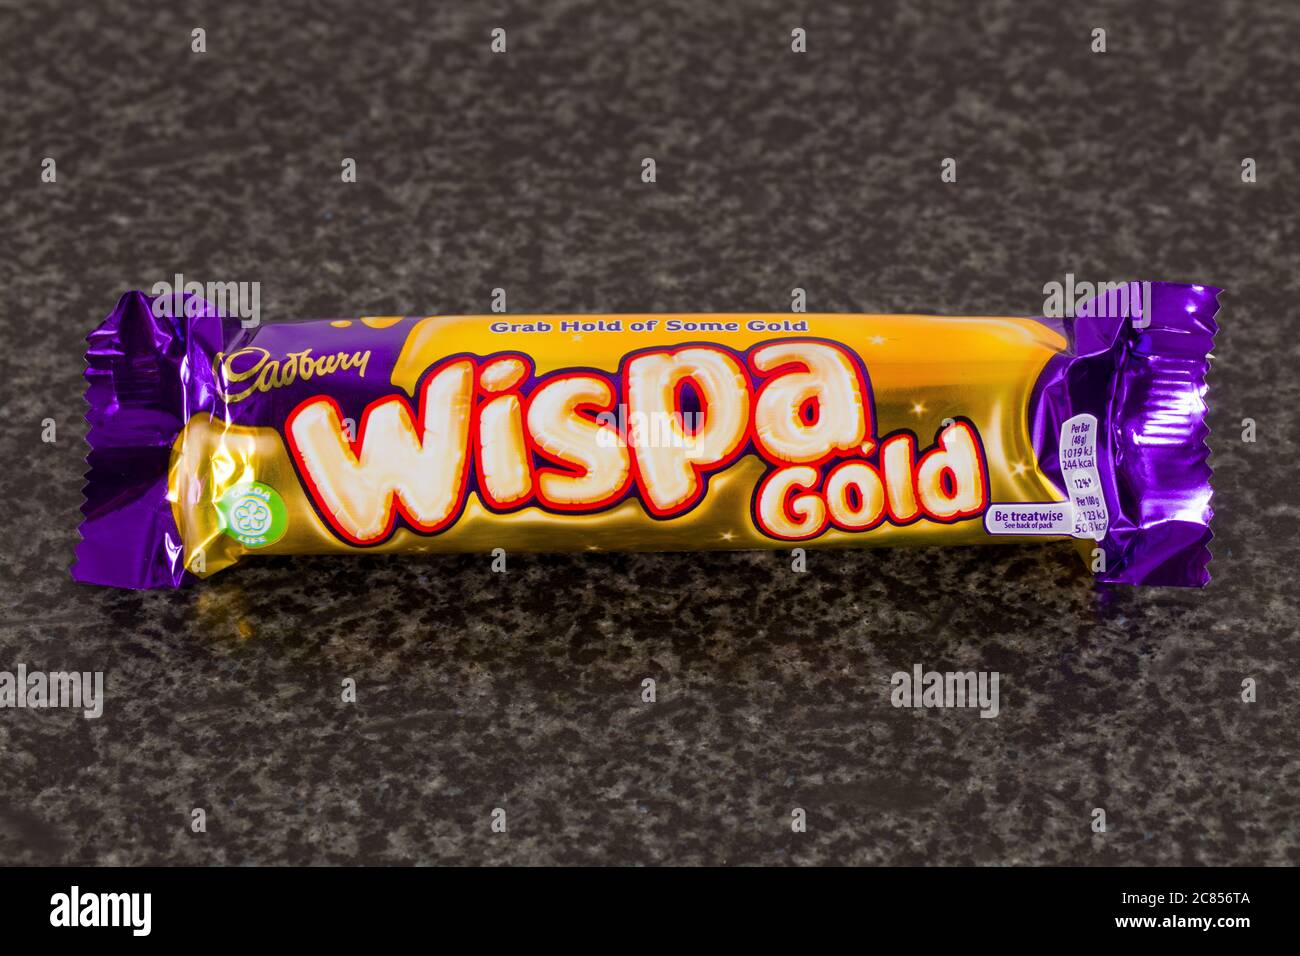 Cadbury Wispa Gold chocolate bar Stock Photo - Alamy